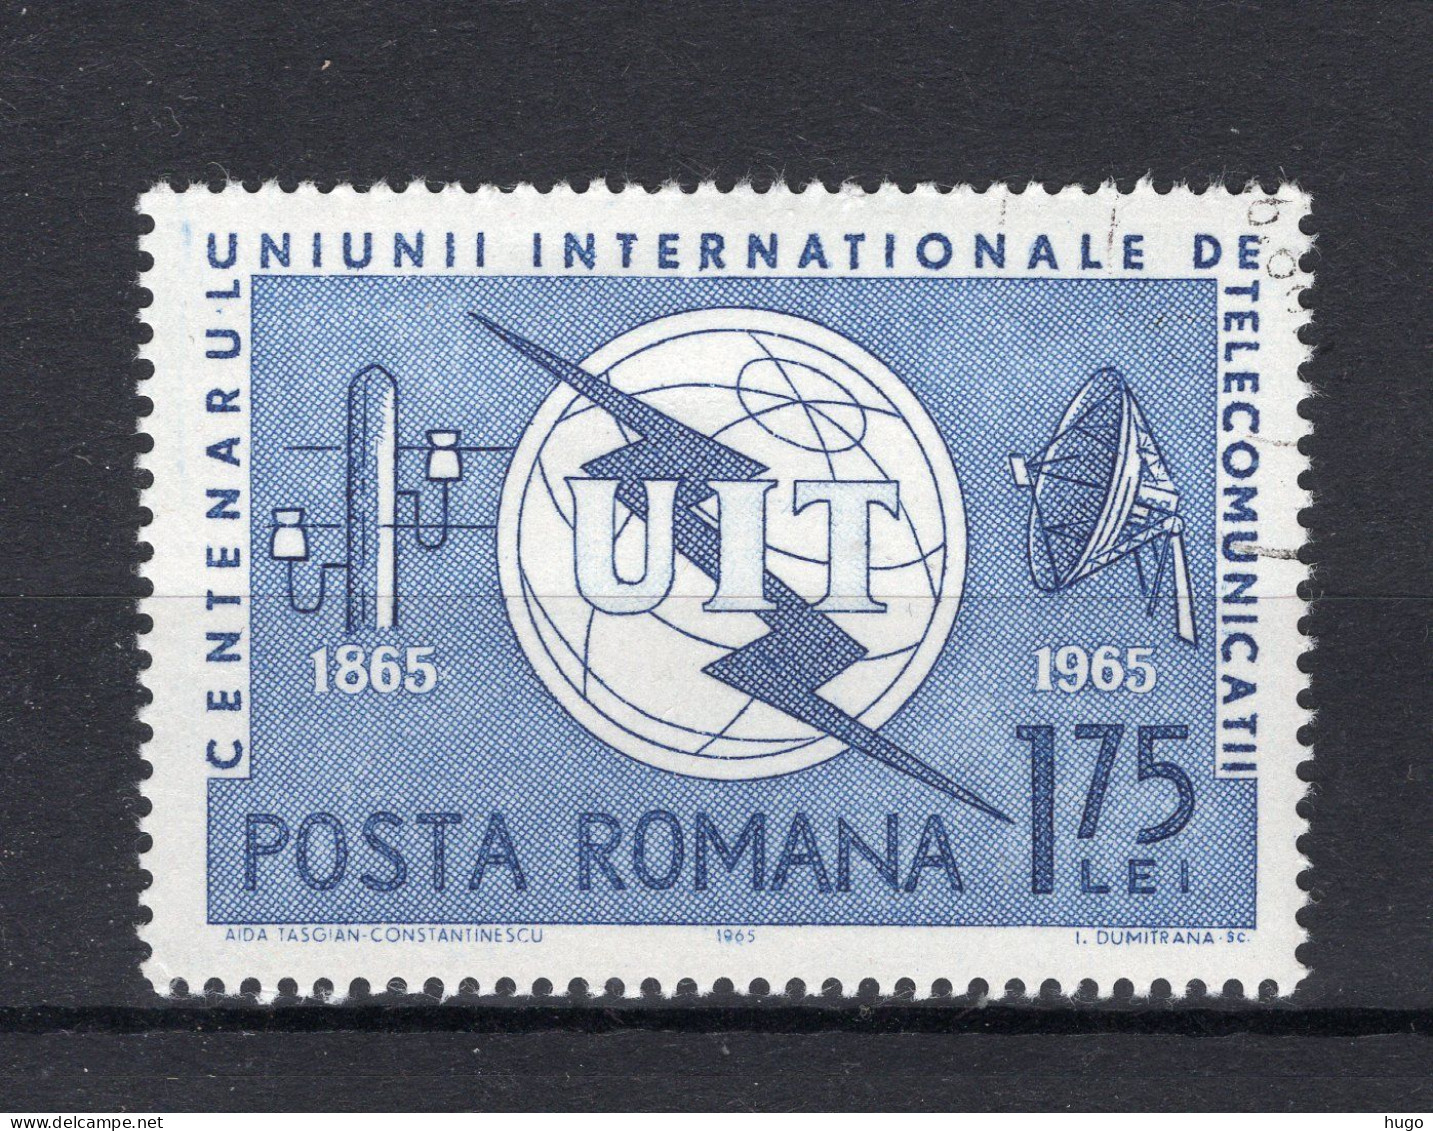 ROEMENIE Yt. 2125° Gestempeld 1965 - Usati